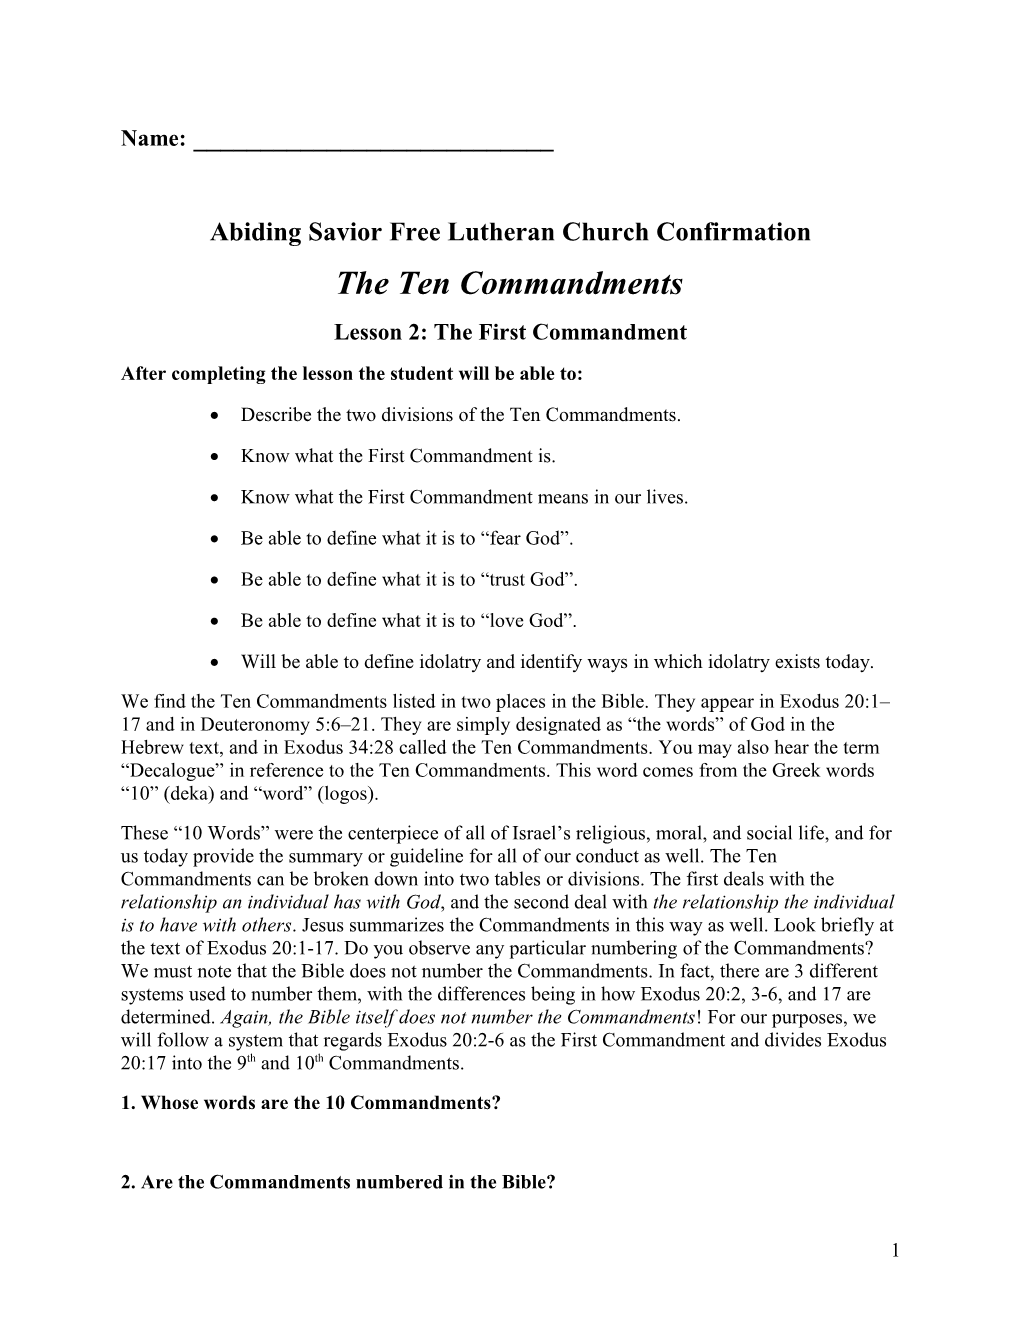 Abiding Savior Free Lutheran Confirmation